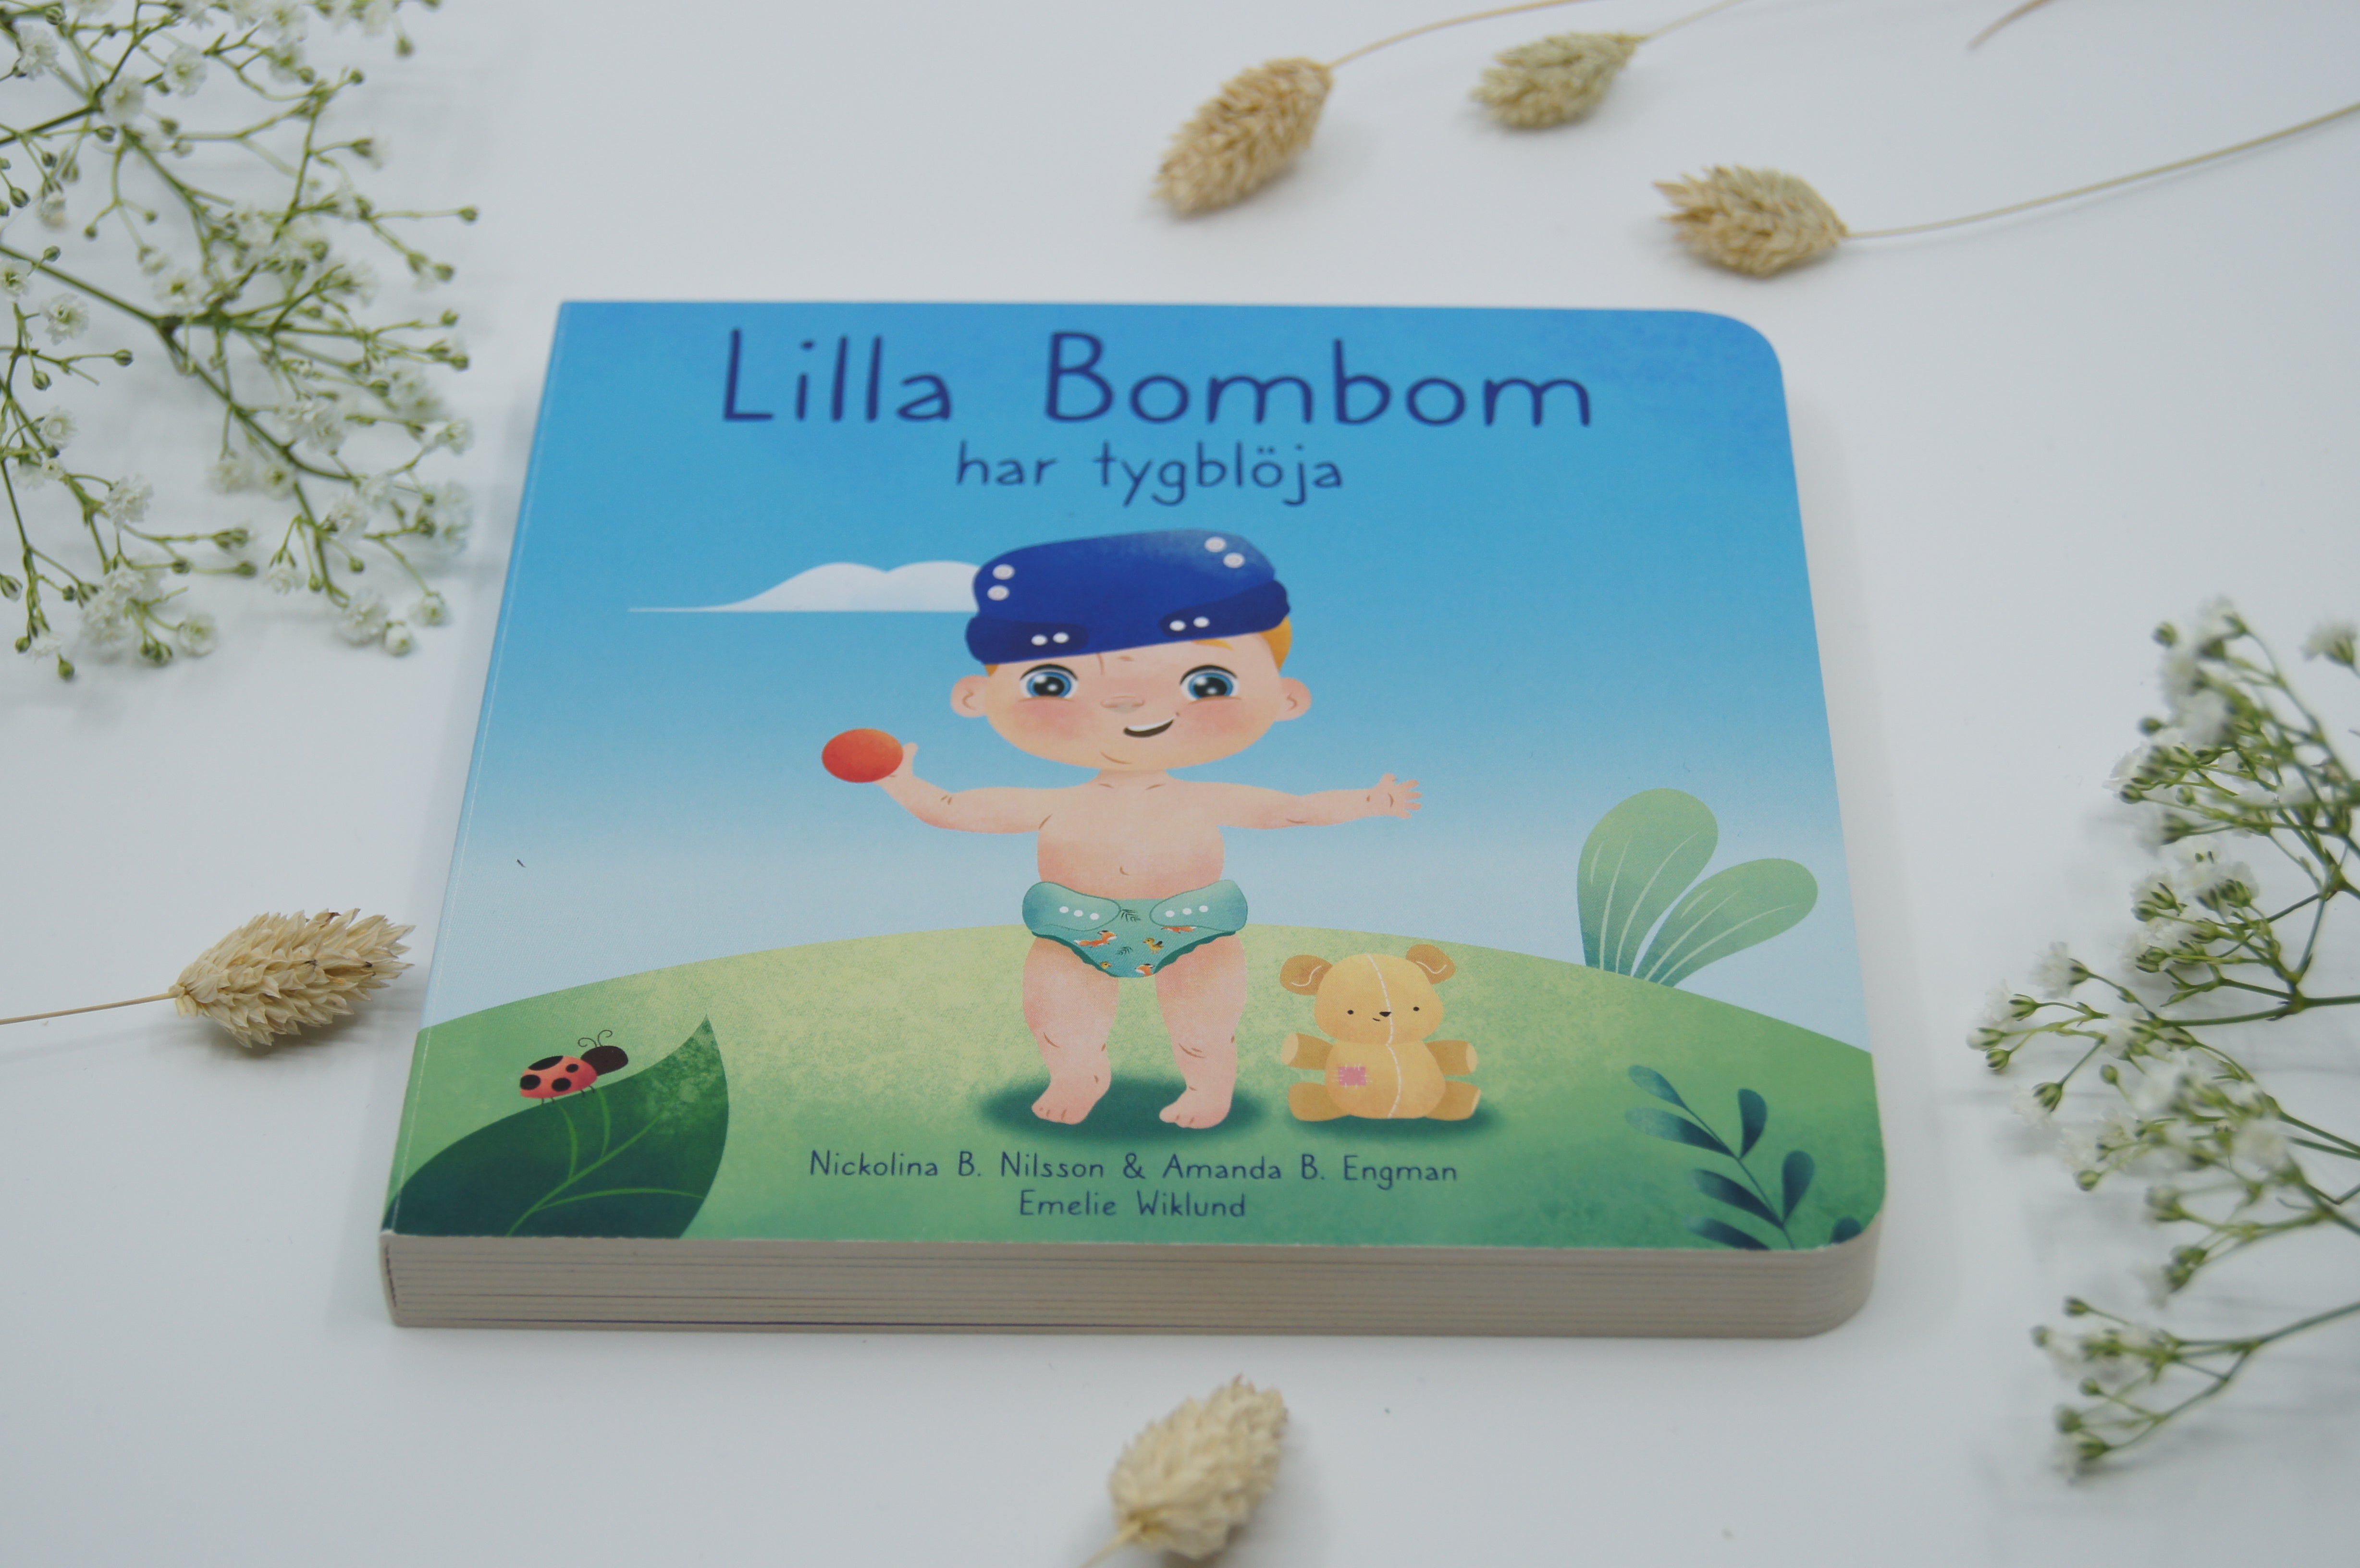 Lilla Bombom har tygblöja, barnbok, pekbok, tygblöjor, miljö, lekfullt lärande, potta, blöjor, bebis, småbarn